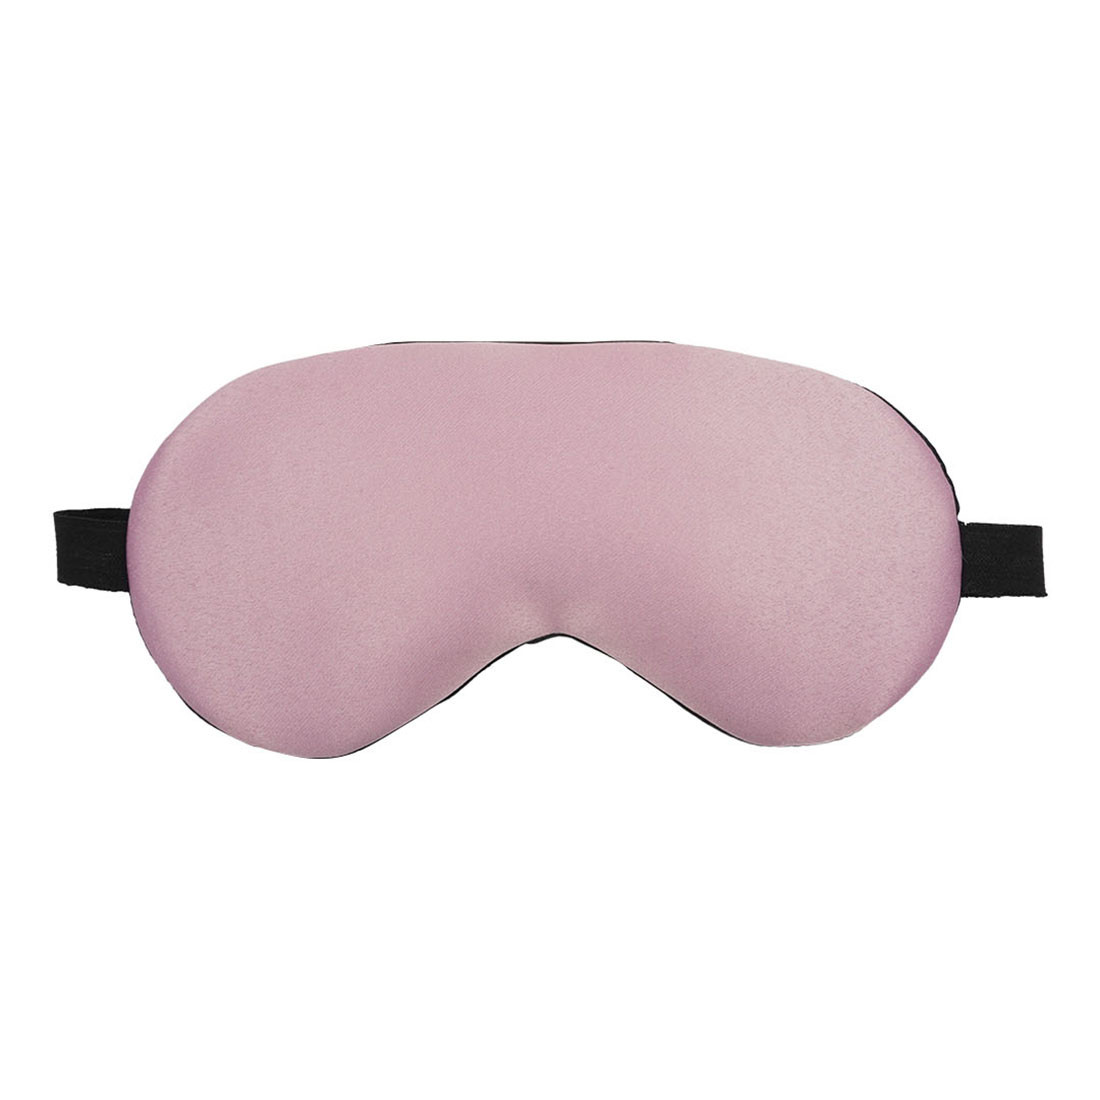 Crazy Corner Eye Mask Pink Eye Mask/Printed Eye Mask/Sleeping Mask/Travel Eyemask/Eye Mask For Girl/Eye Mask For Women (7.5 x 4 Inches)